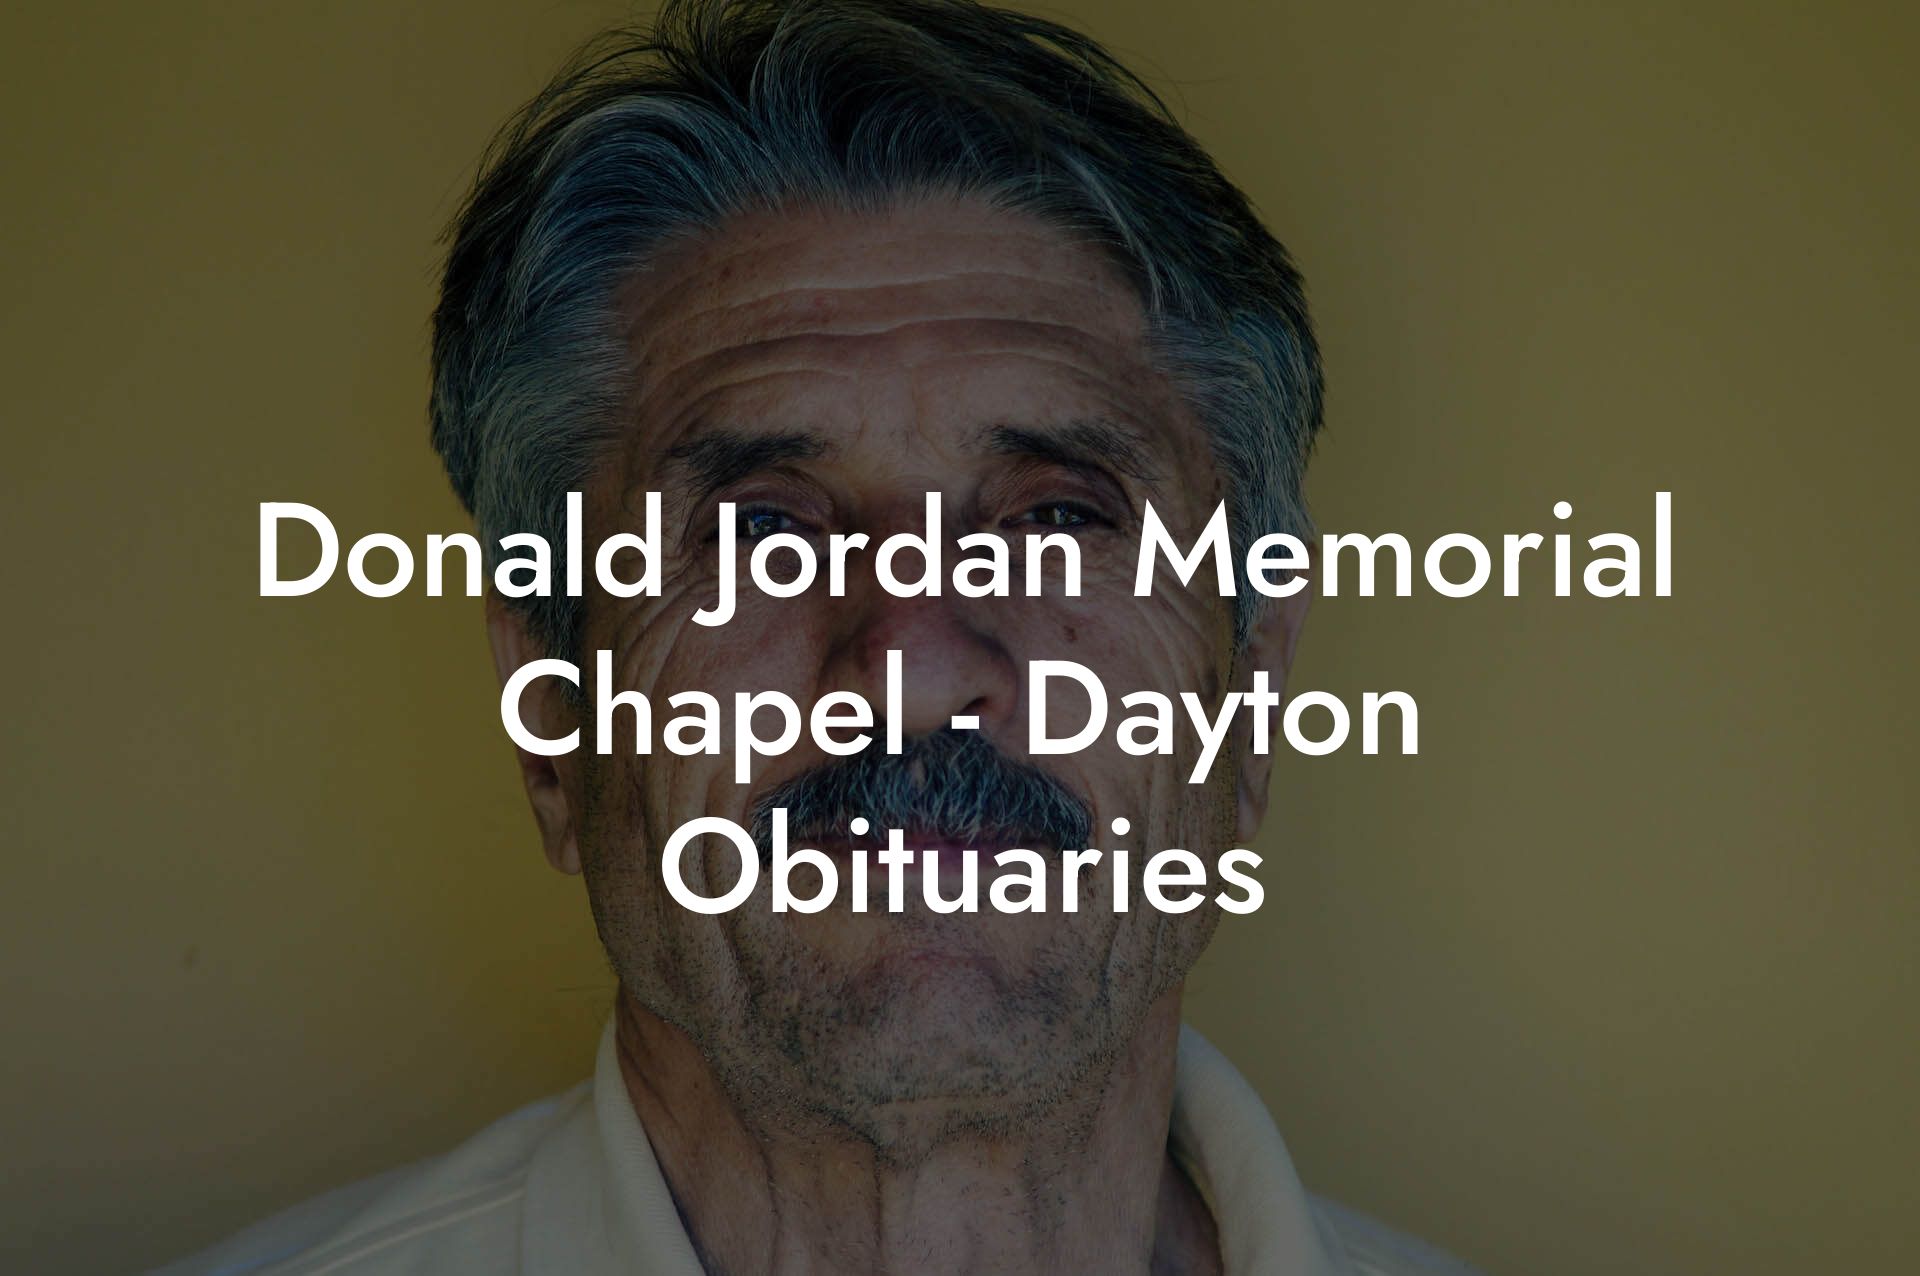 Donald Jordan Memorial Chapel - Dayton Obituaries